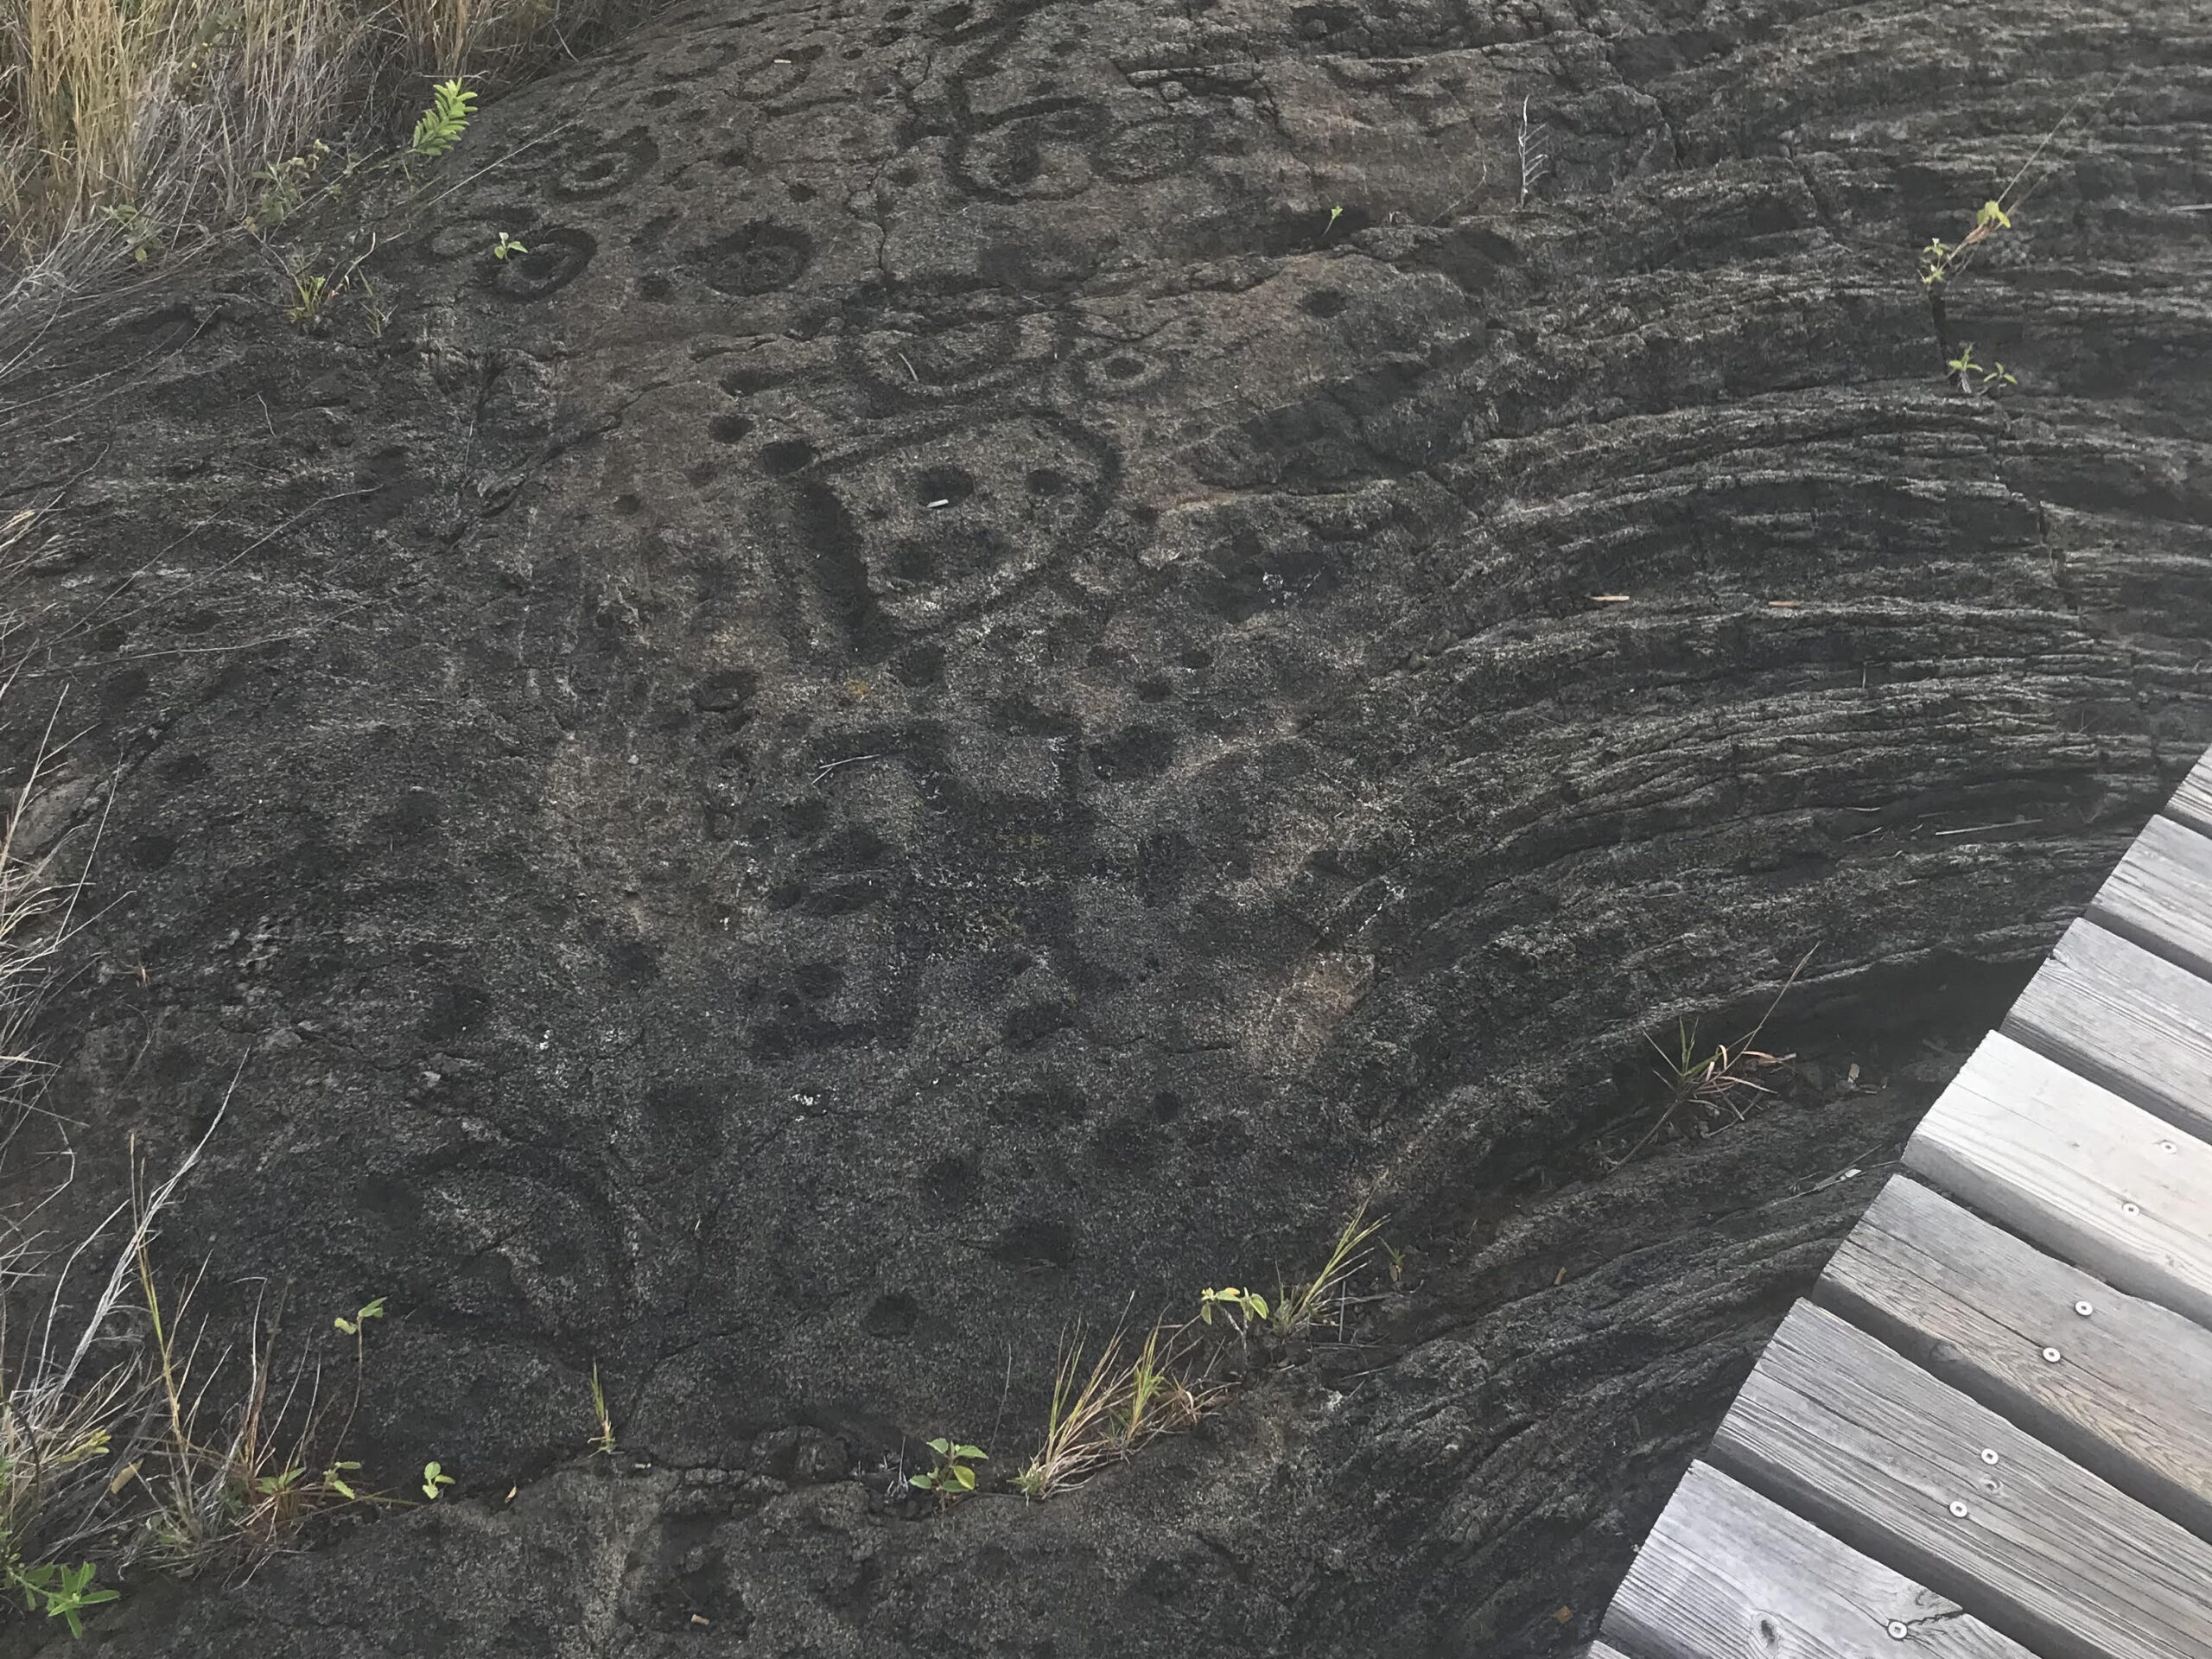 Petroglyphs along the Puu Loa Trail